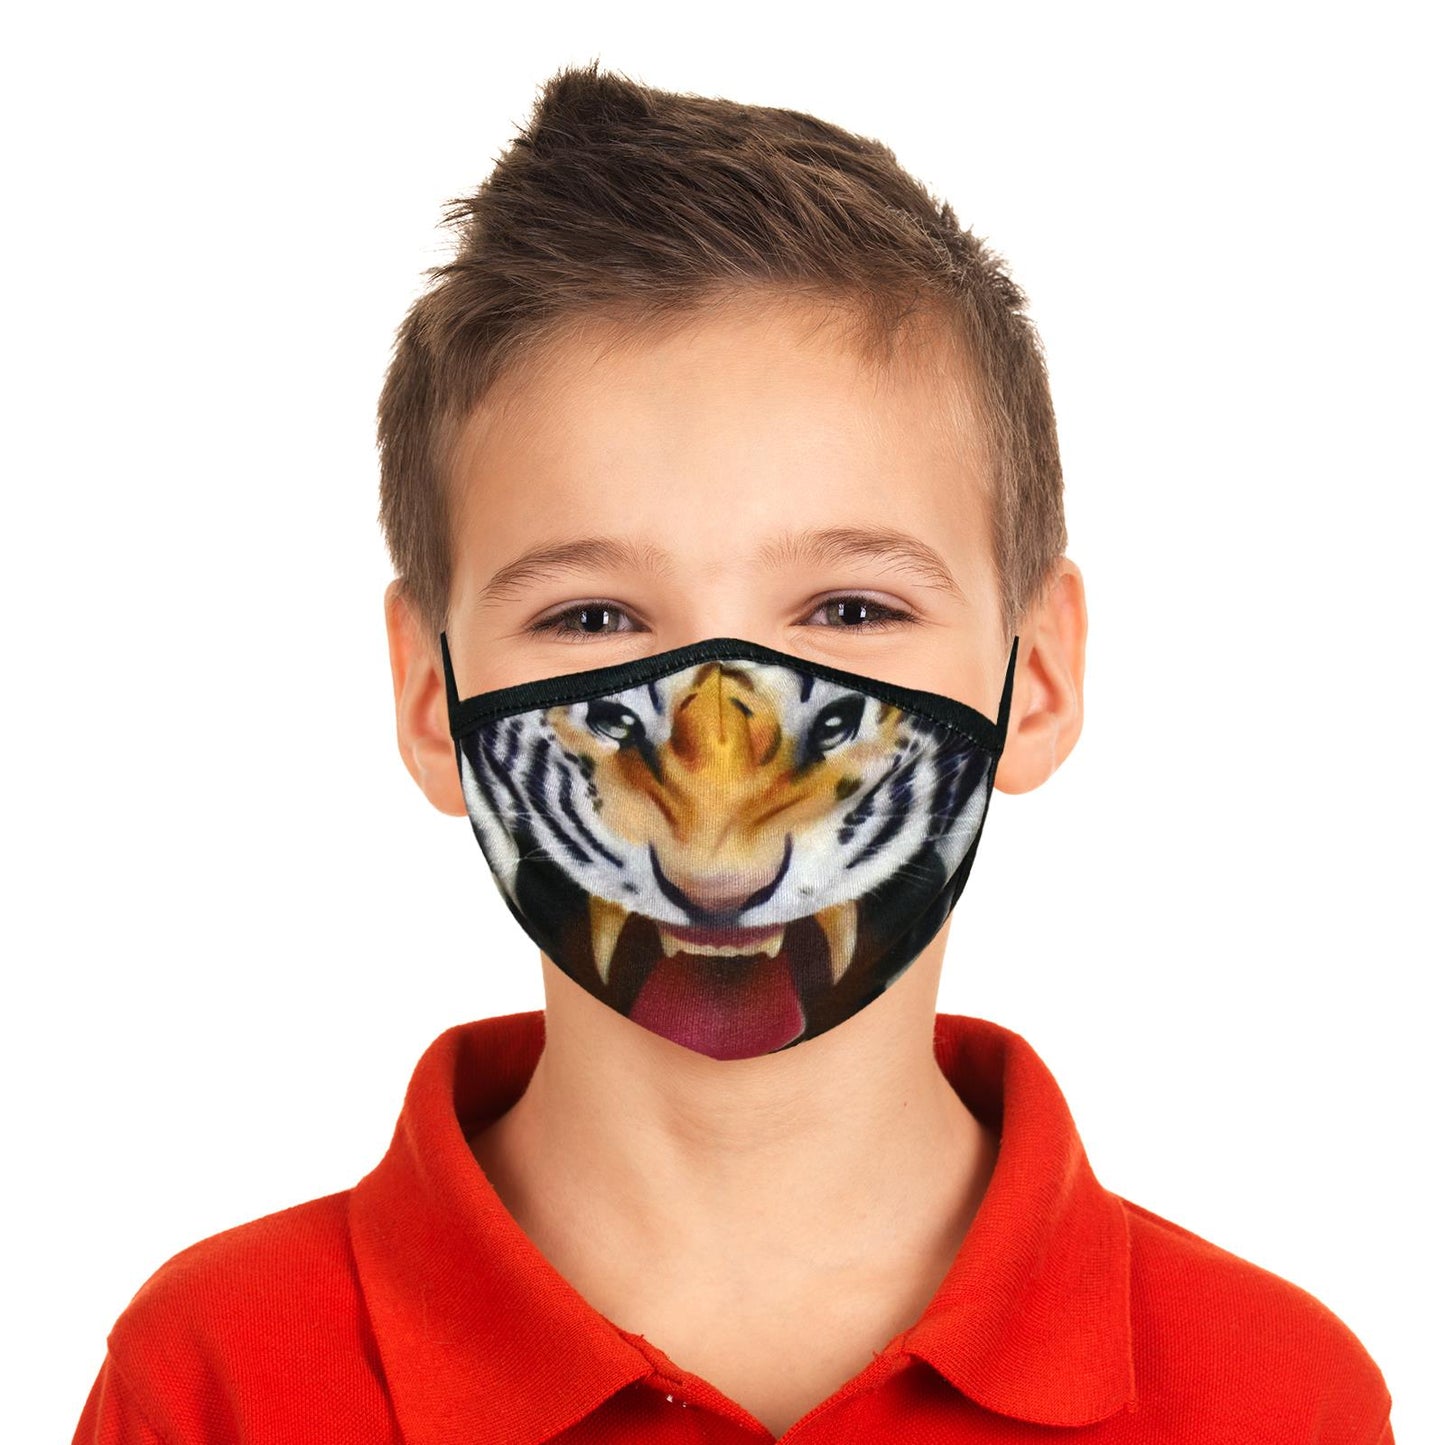 Fashionable Kids Face Masks with Various Designs, Cute Unisex Kids Masks, Colorful Children's Face Masks